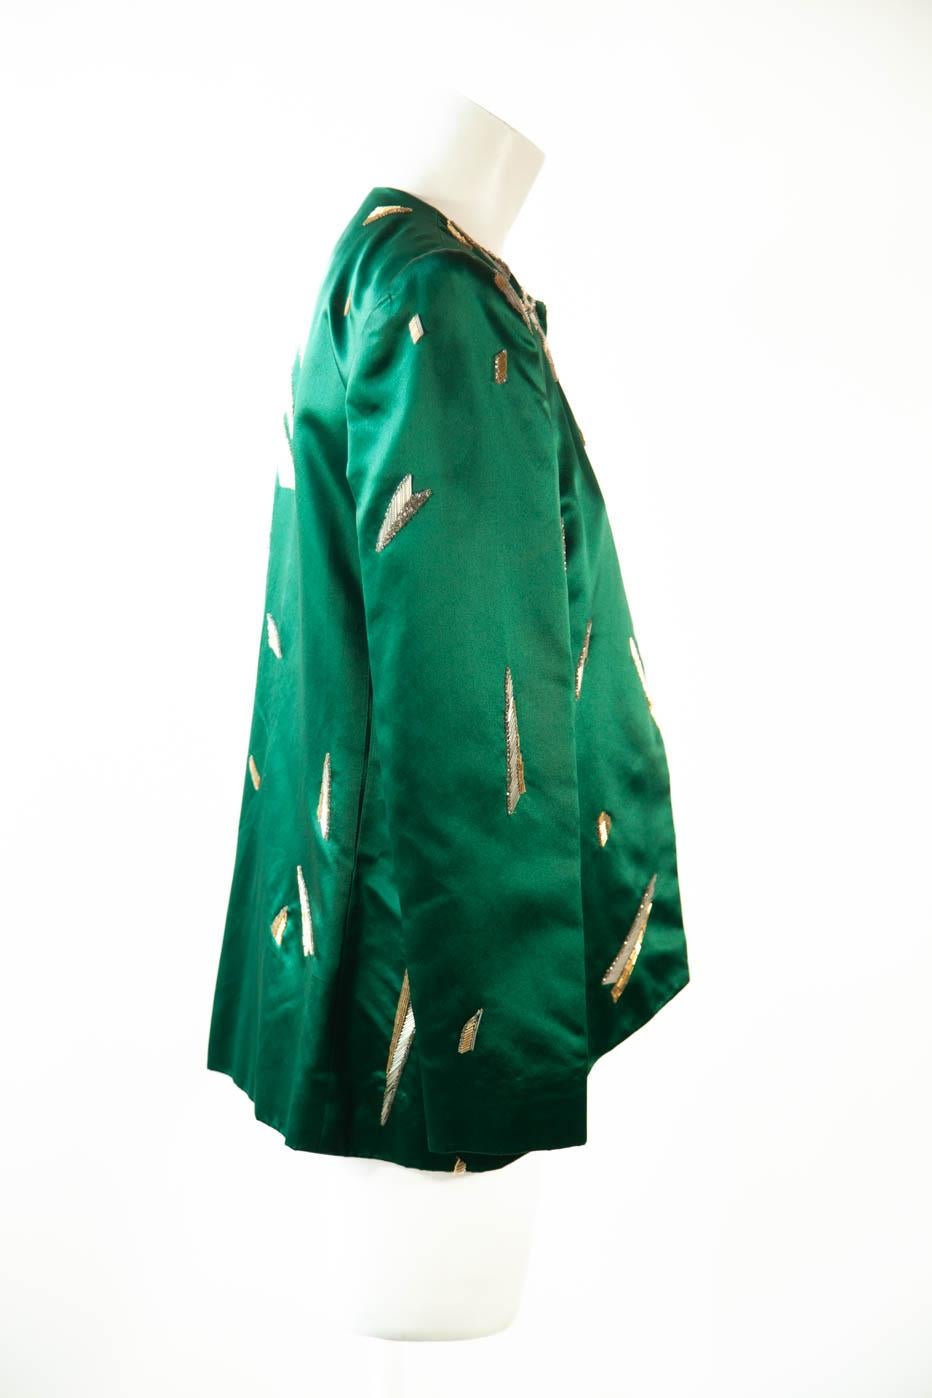 Carolina Herrera silk beaded blazer, excellent condition. 

Size 6